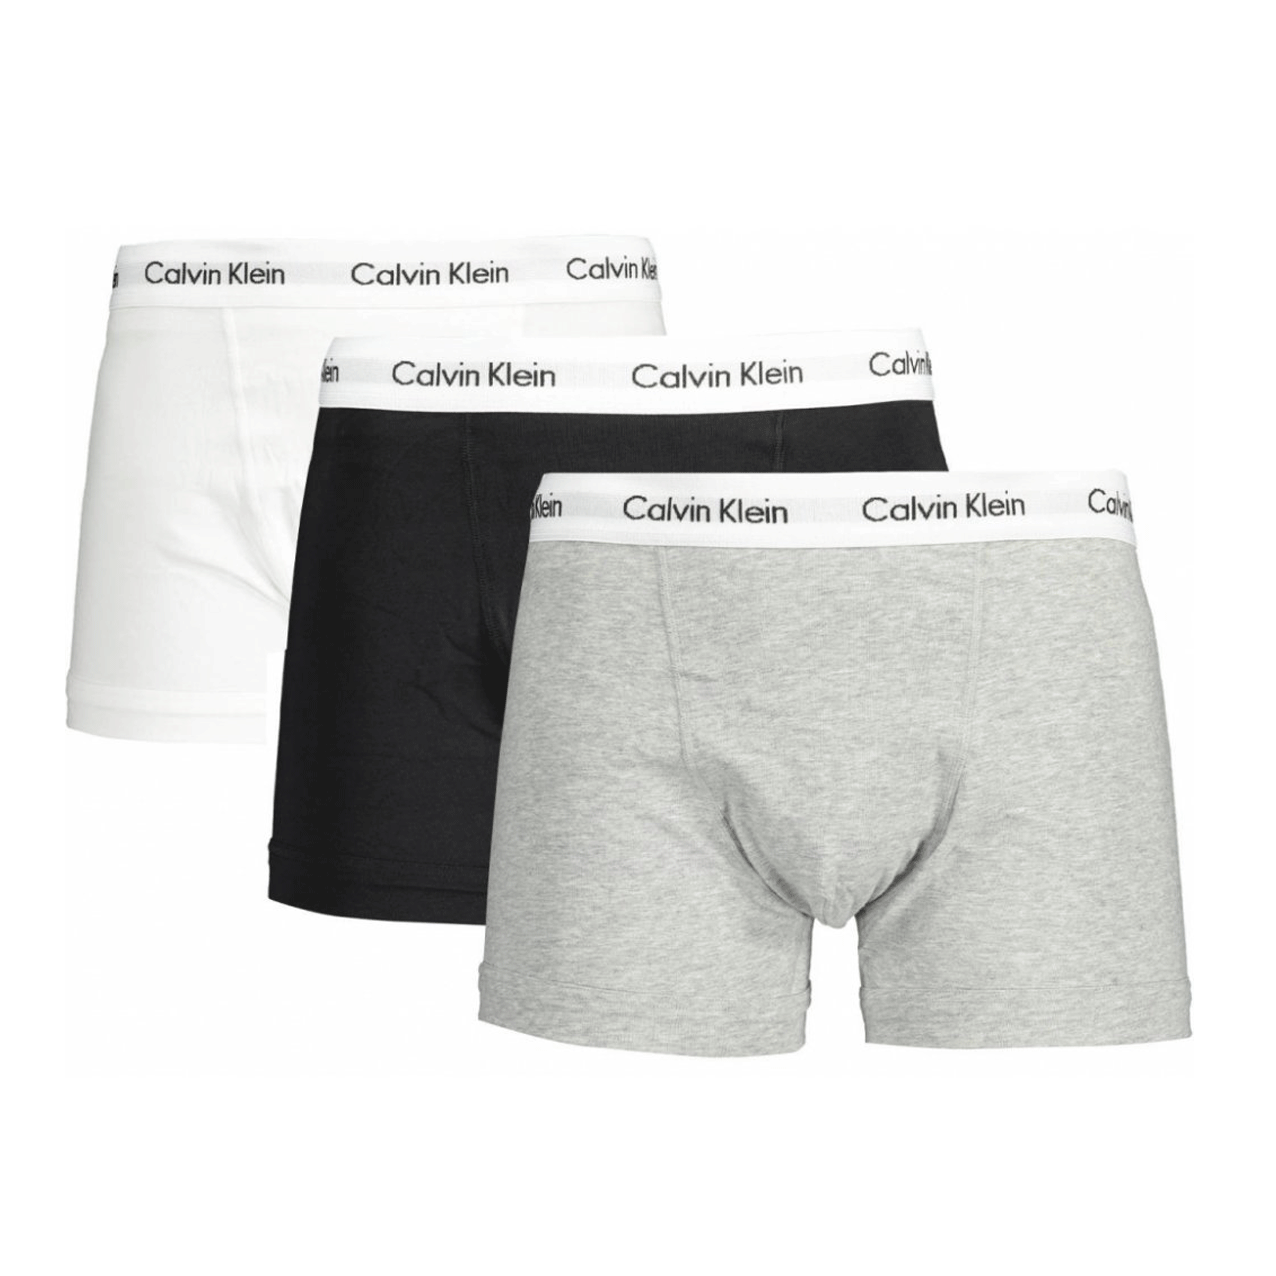 Calvin Klein Pack of 3 Boxers - White/Grey/Black - X Large  | TJ Hughes Black